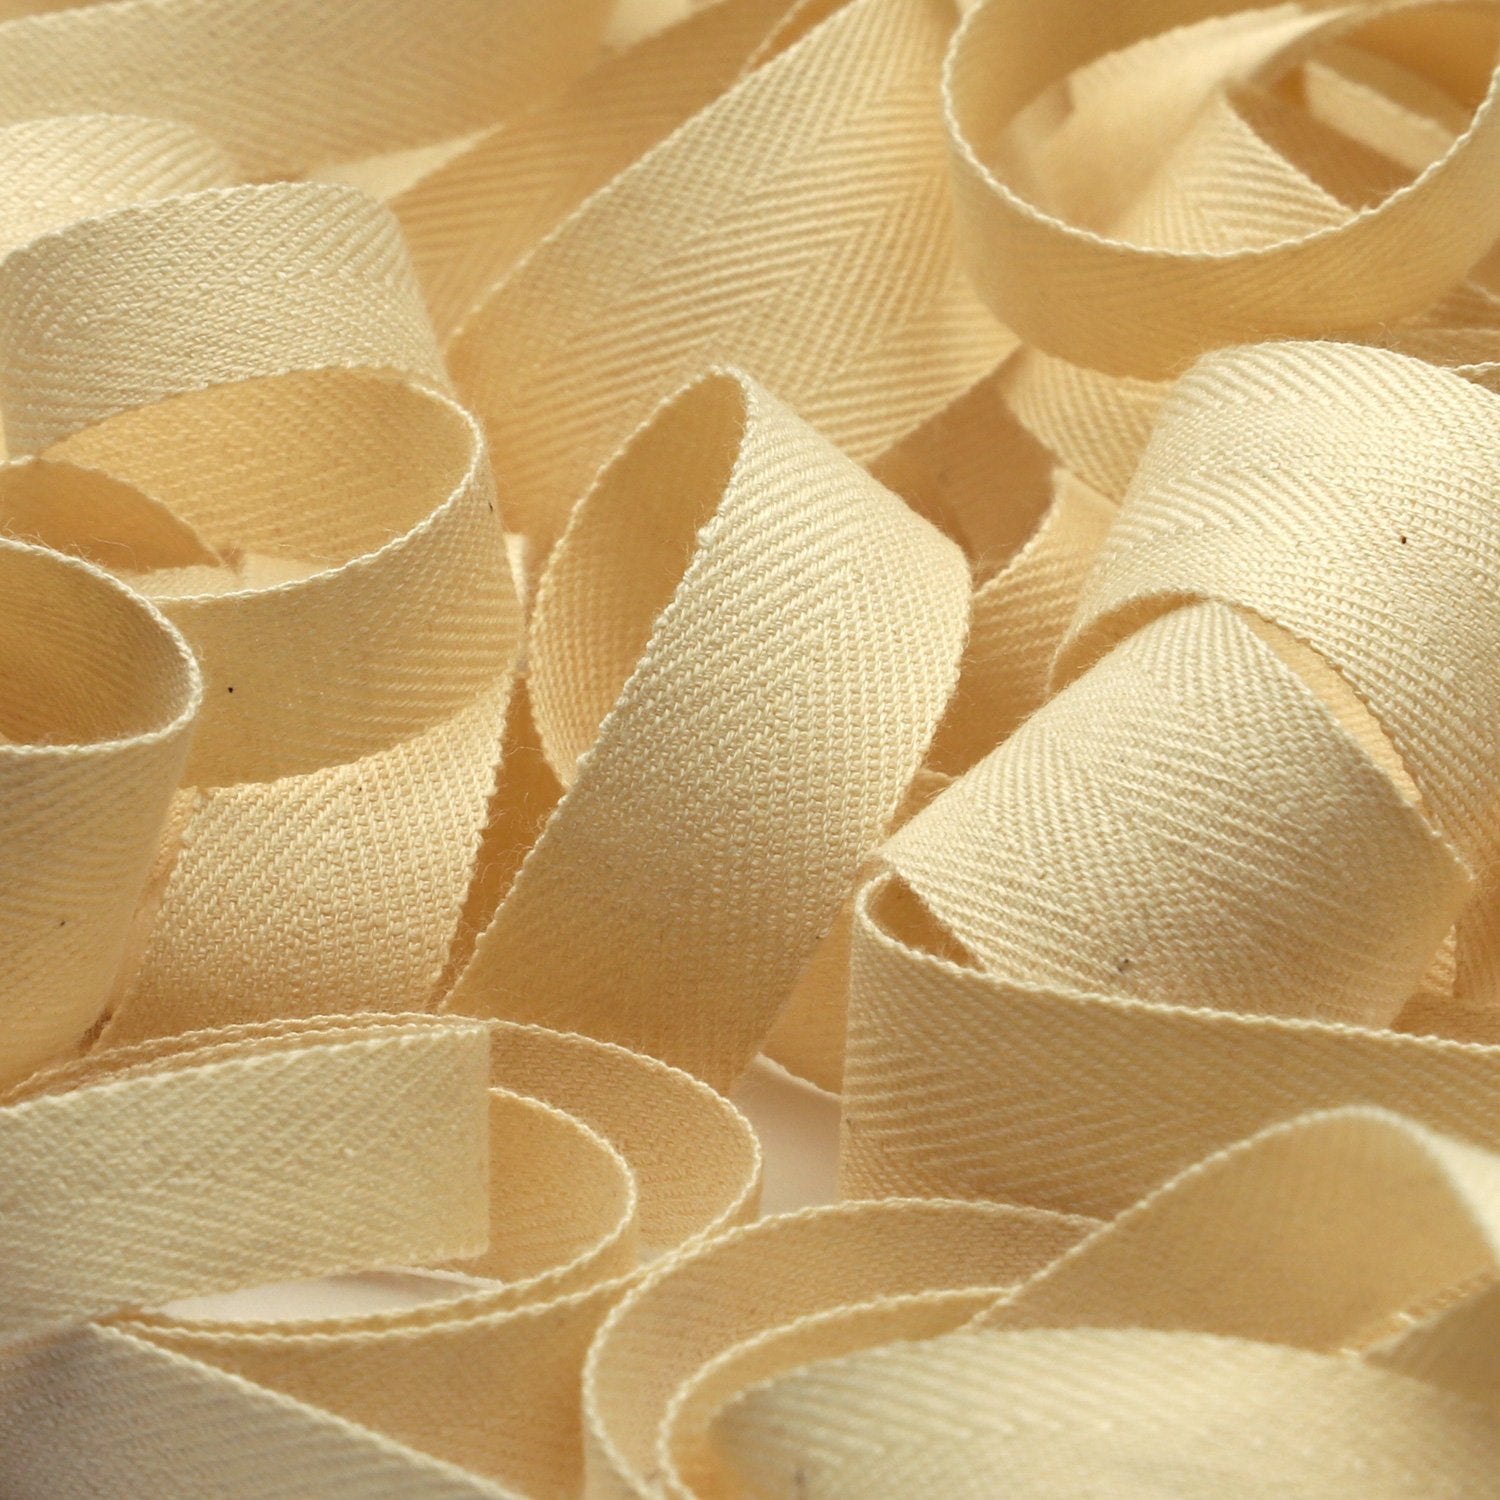 FUJIYAMA RIBBON Organic Cotton Herringbone Ribbon 18mm Ecru 9.14 Meters Roll